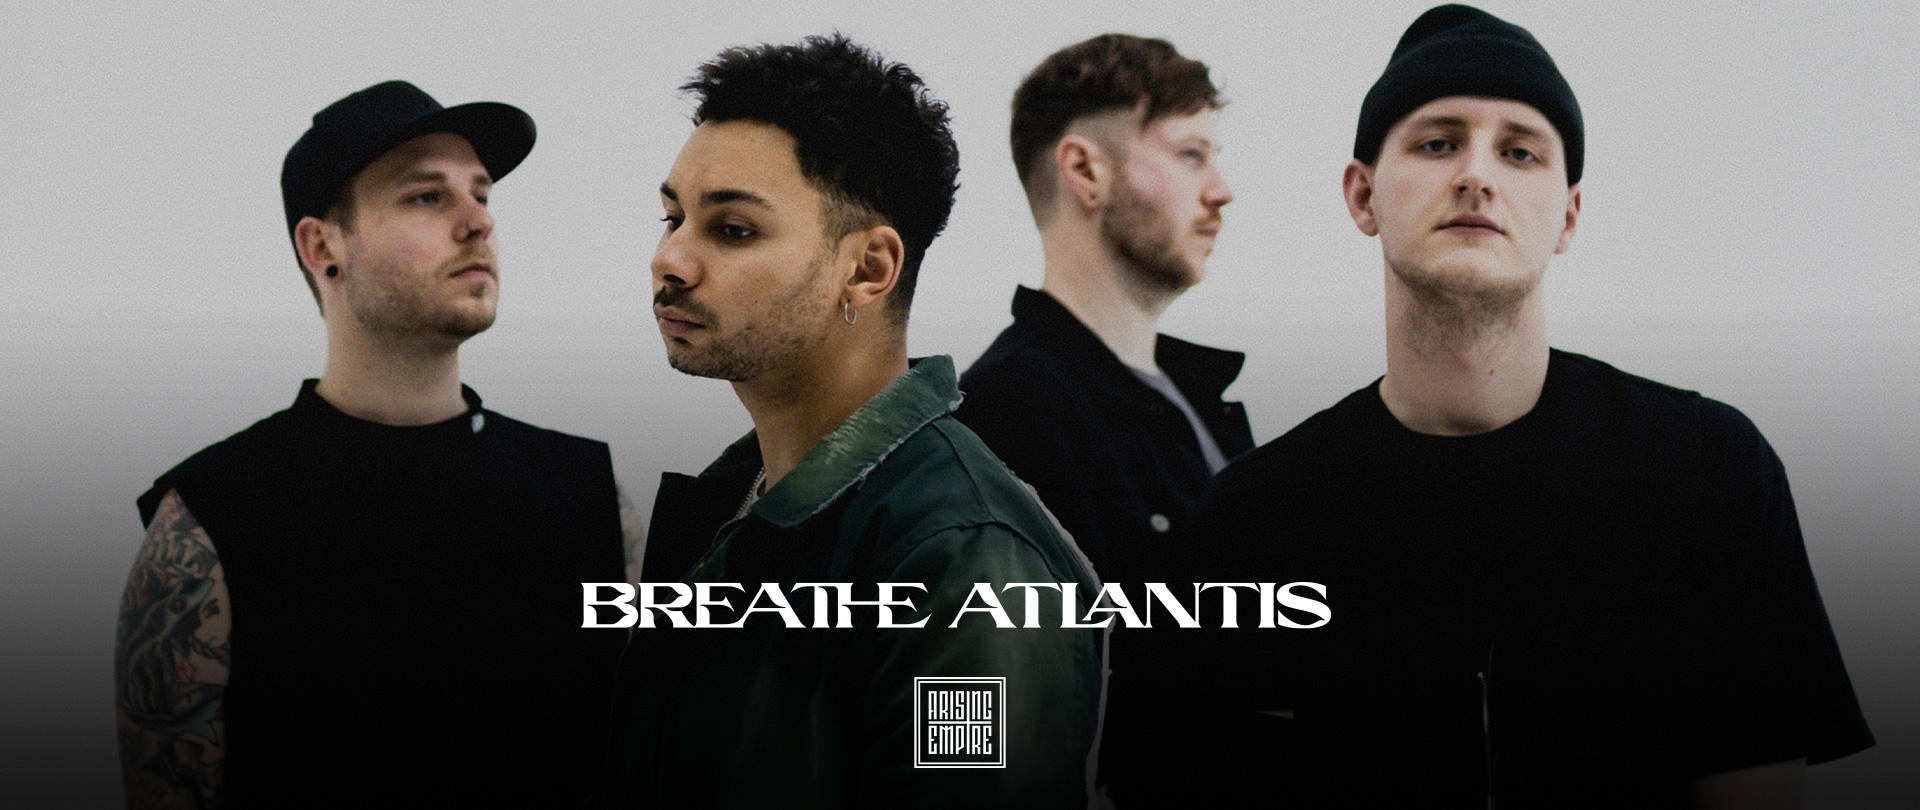 Breathe Atlantis at Arising Empire • Offizieller Online Shop